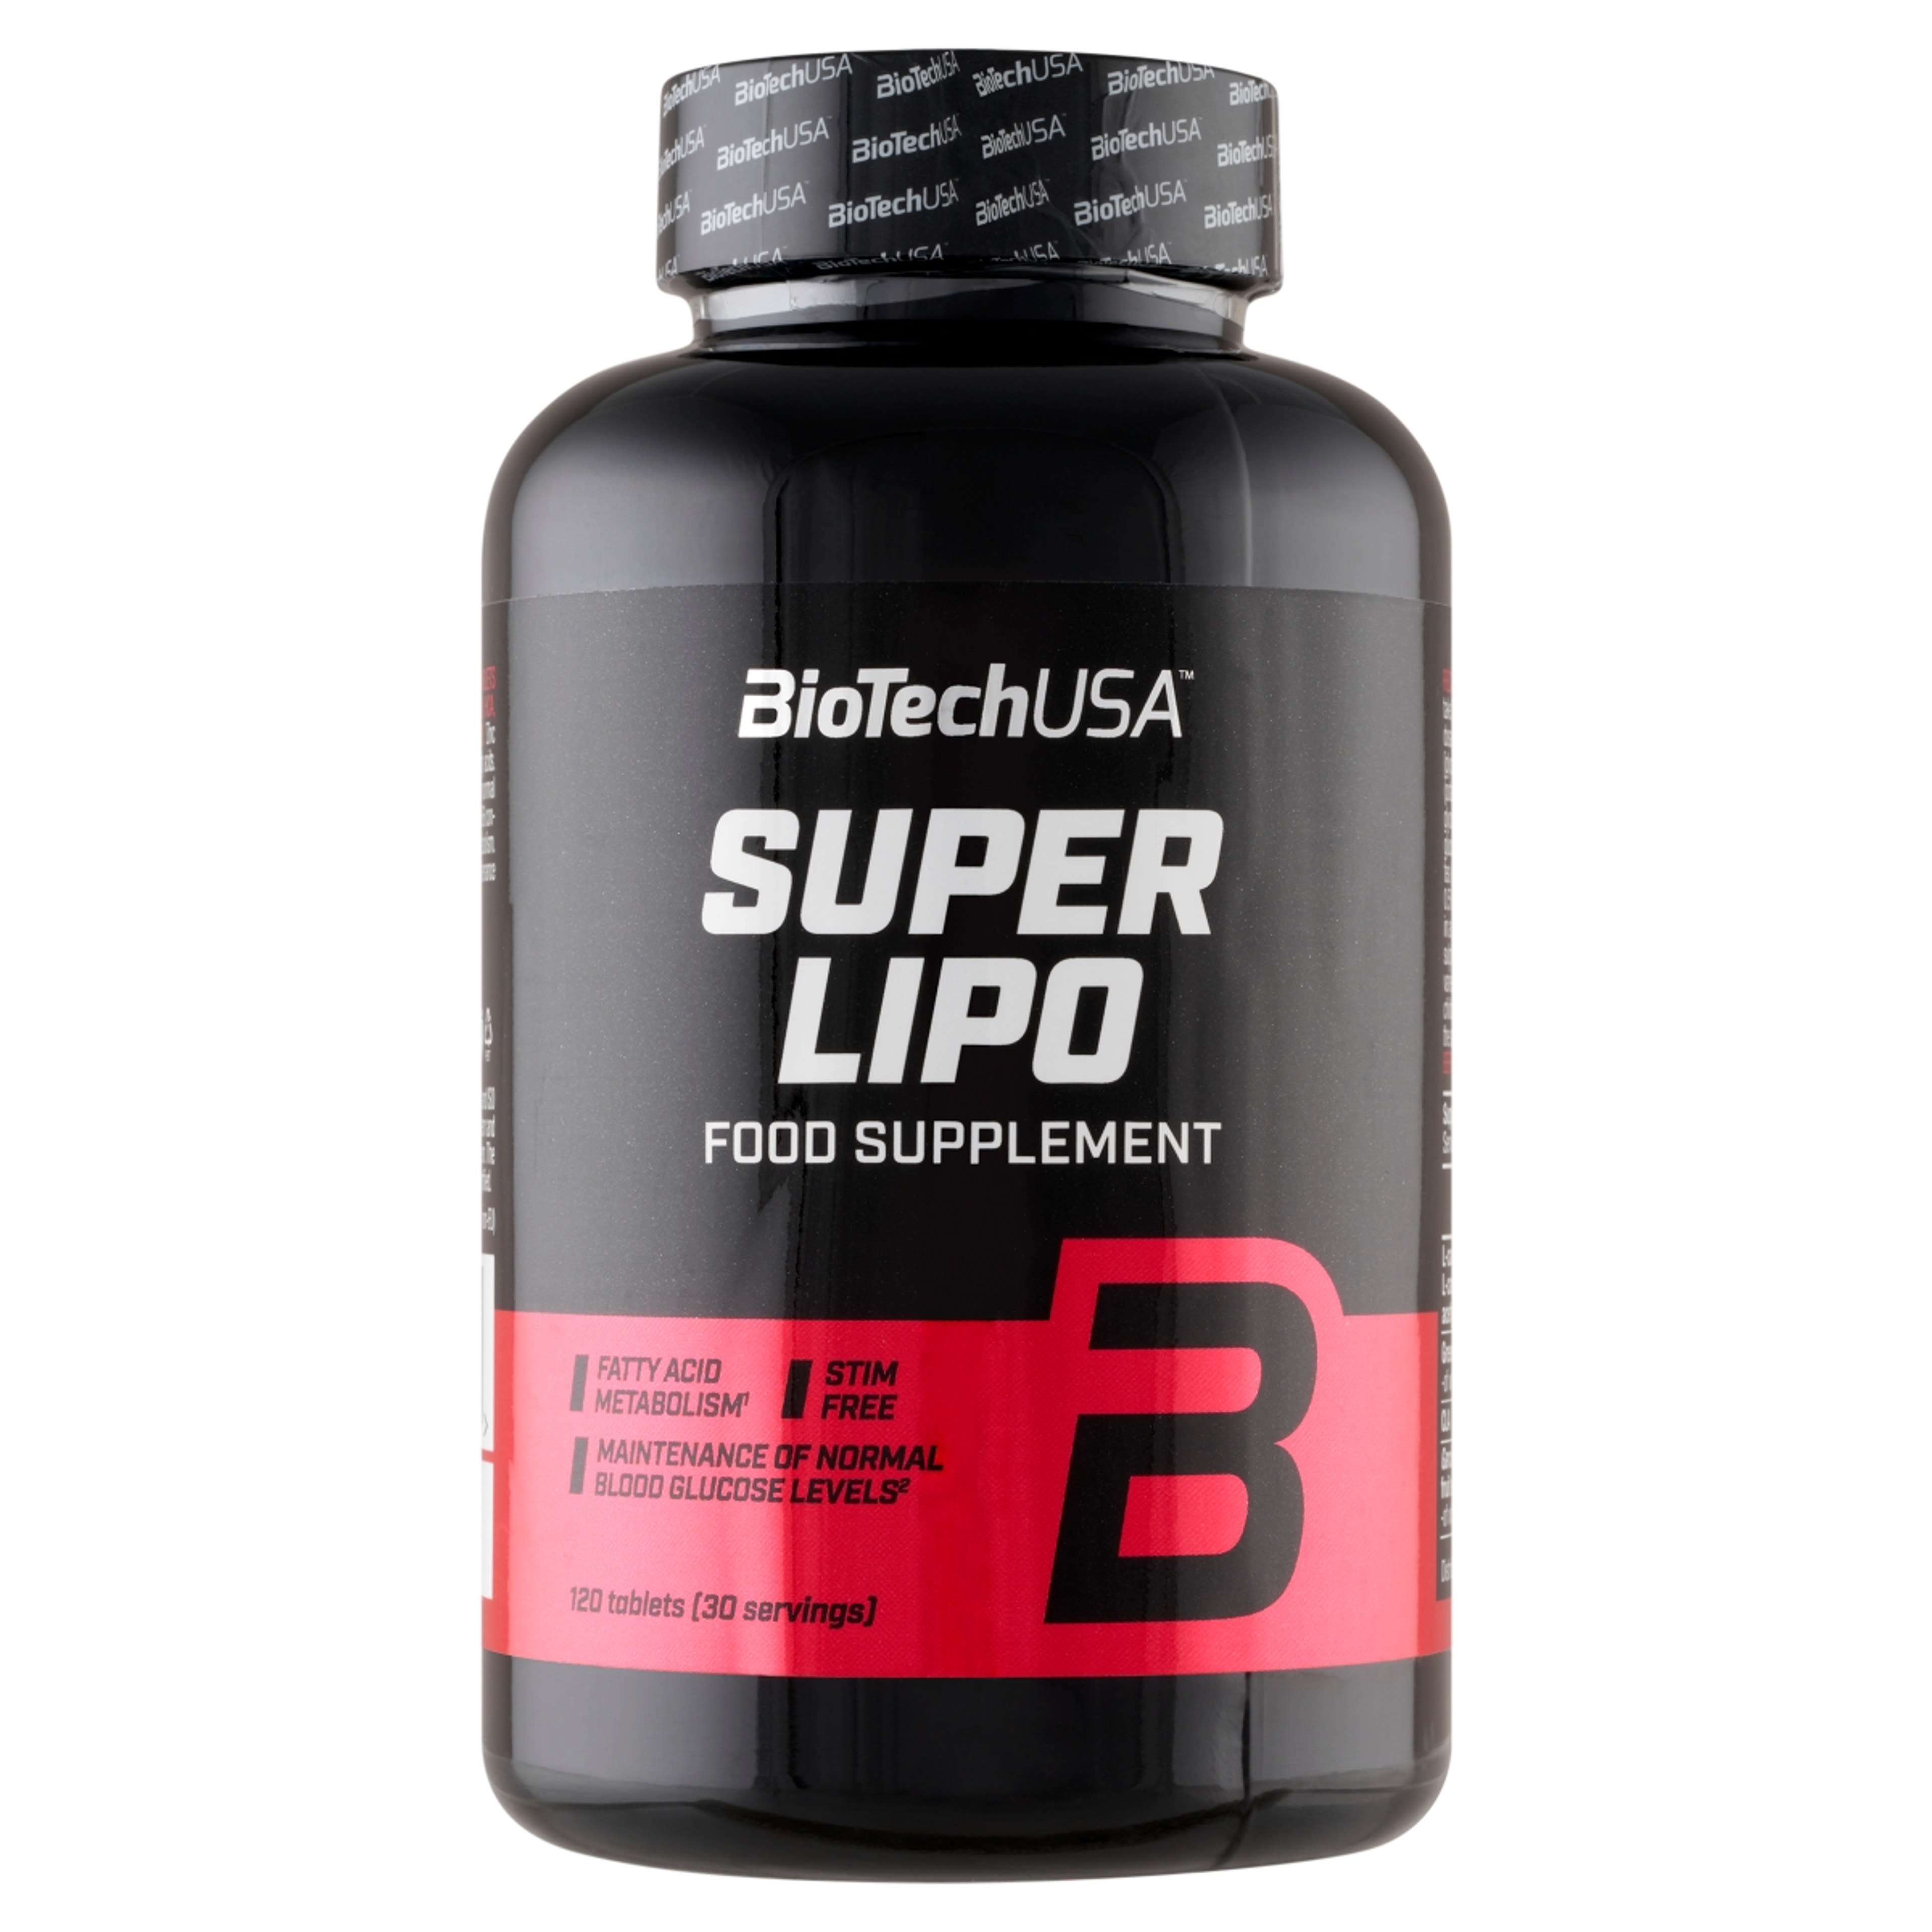 BioTech USA Super Burner étrend-kiegészítő tabletta - 120 db